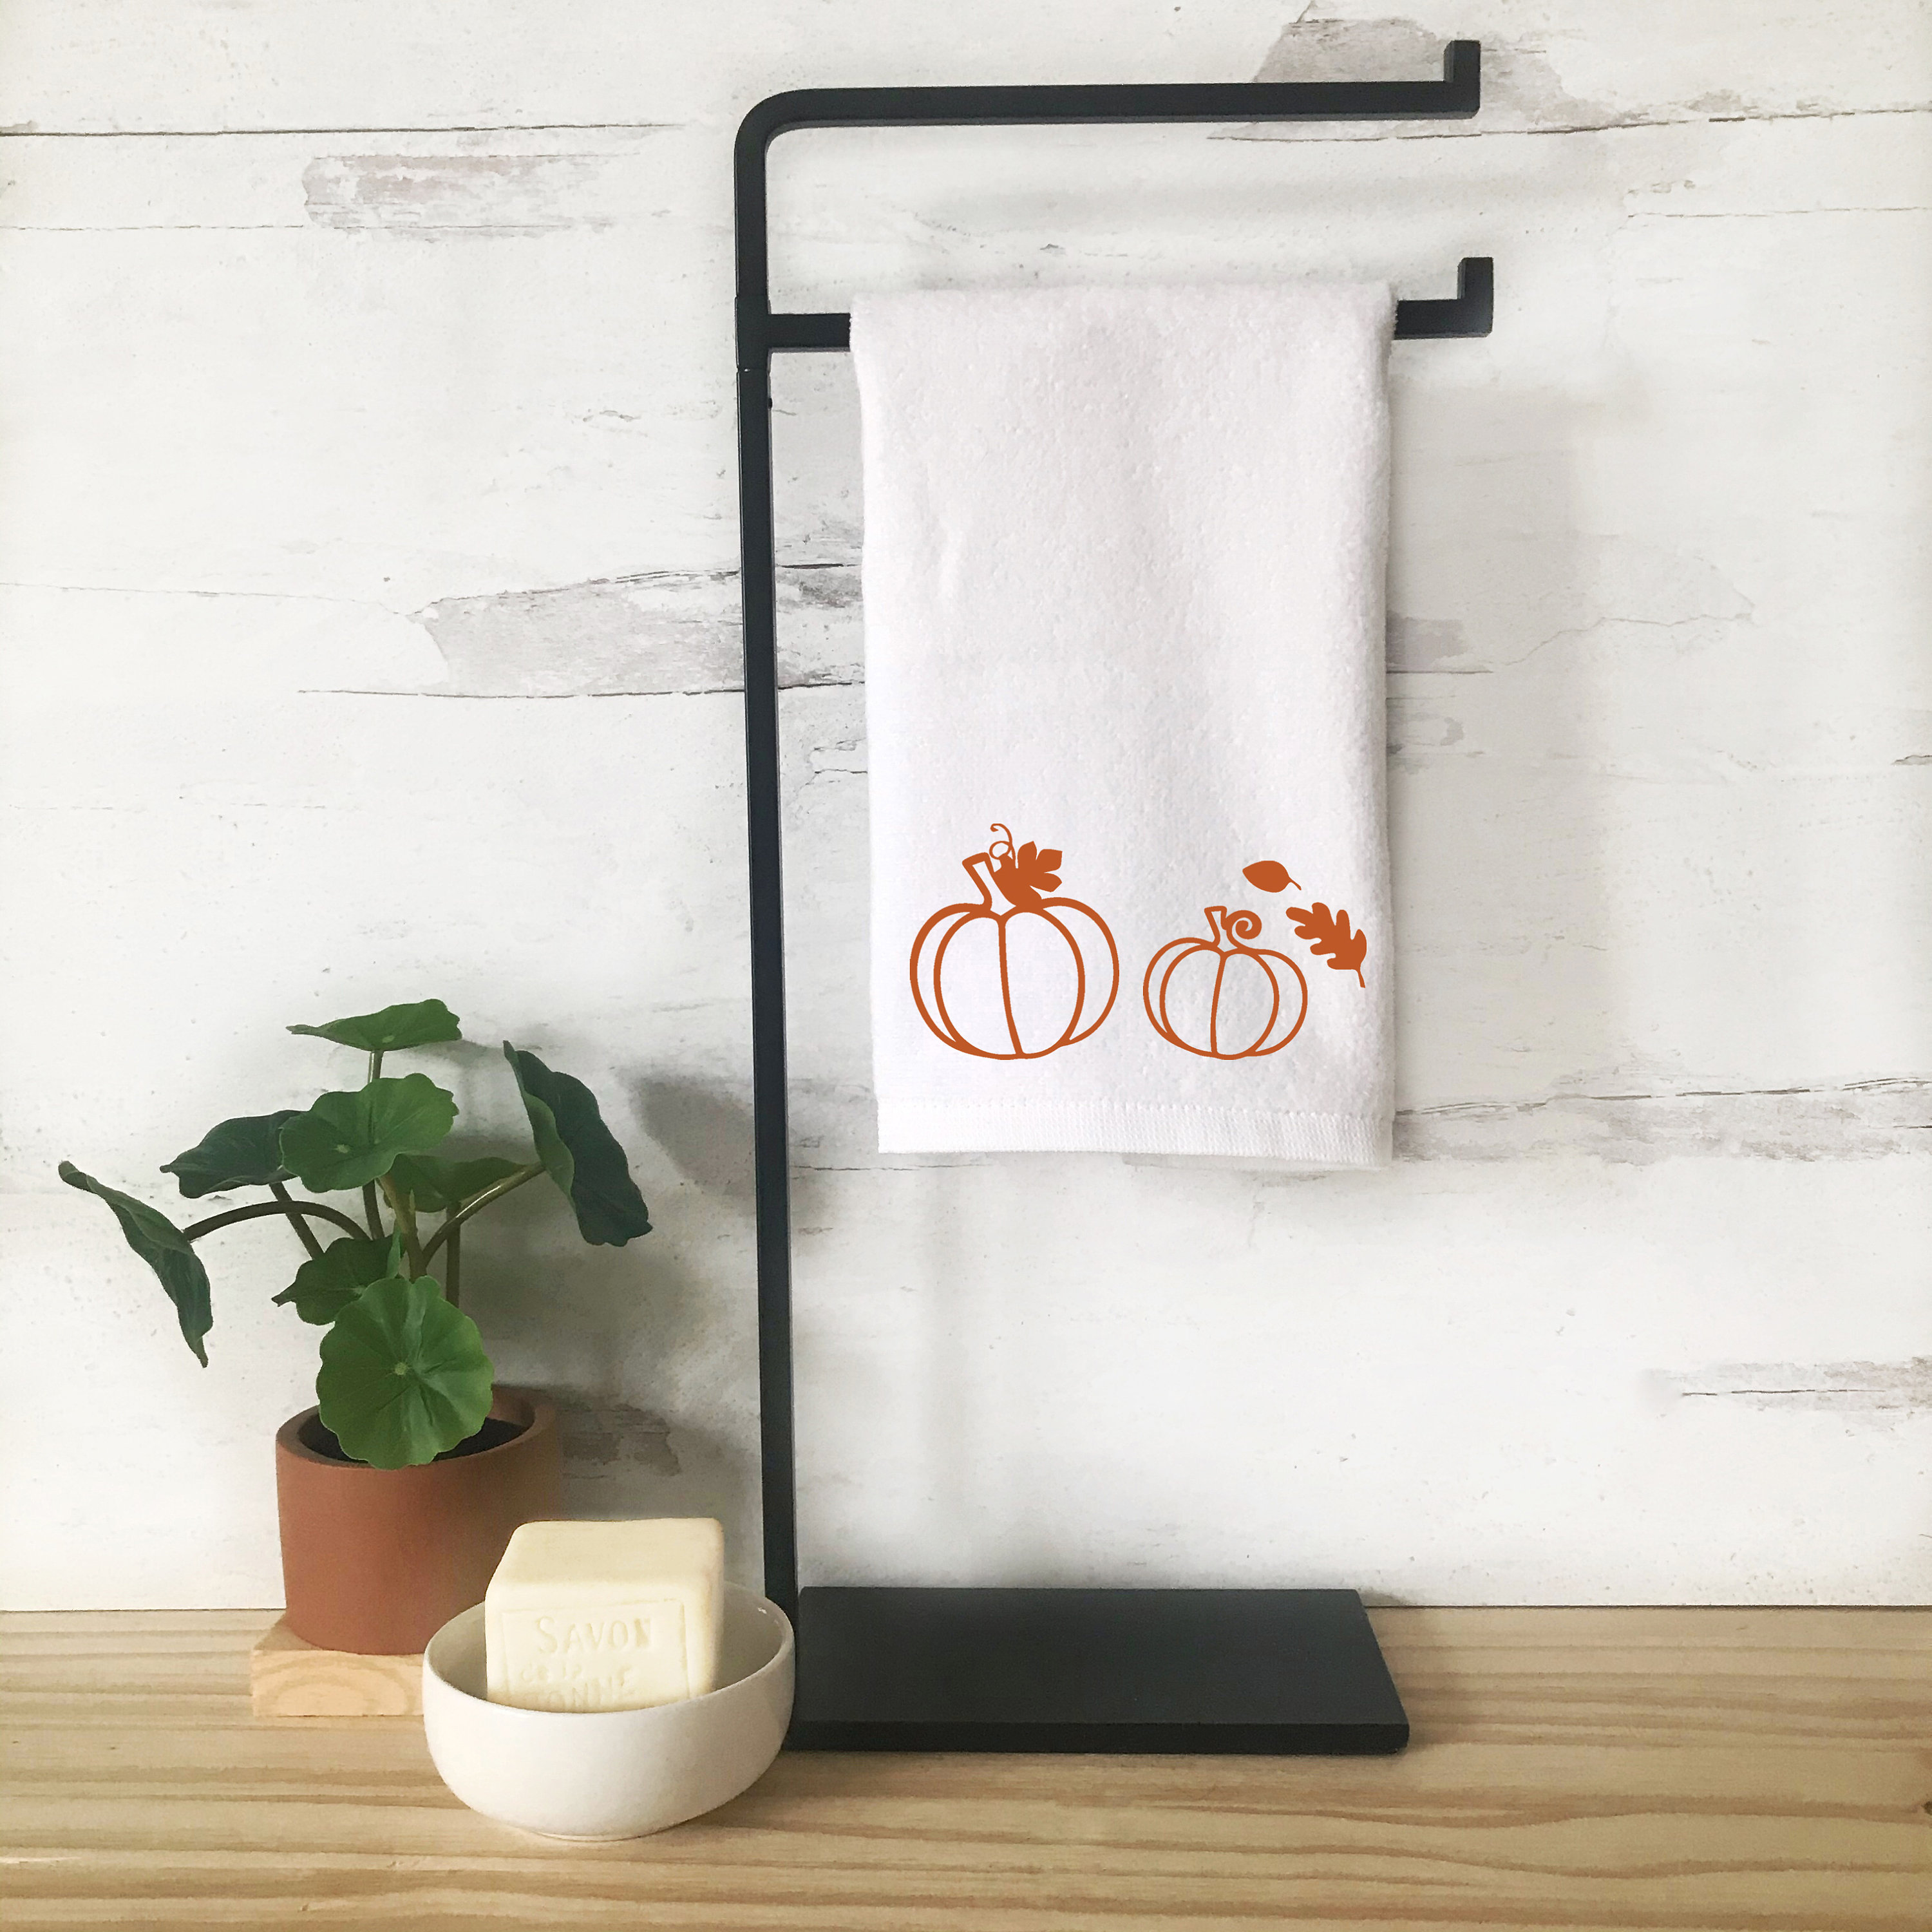 Bathroom Hand Towel Set Fall Home Decor, Small Pumpkin Fingertip